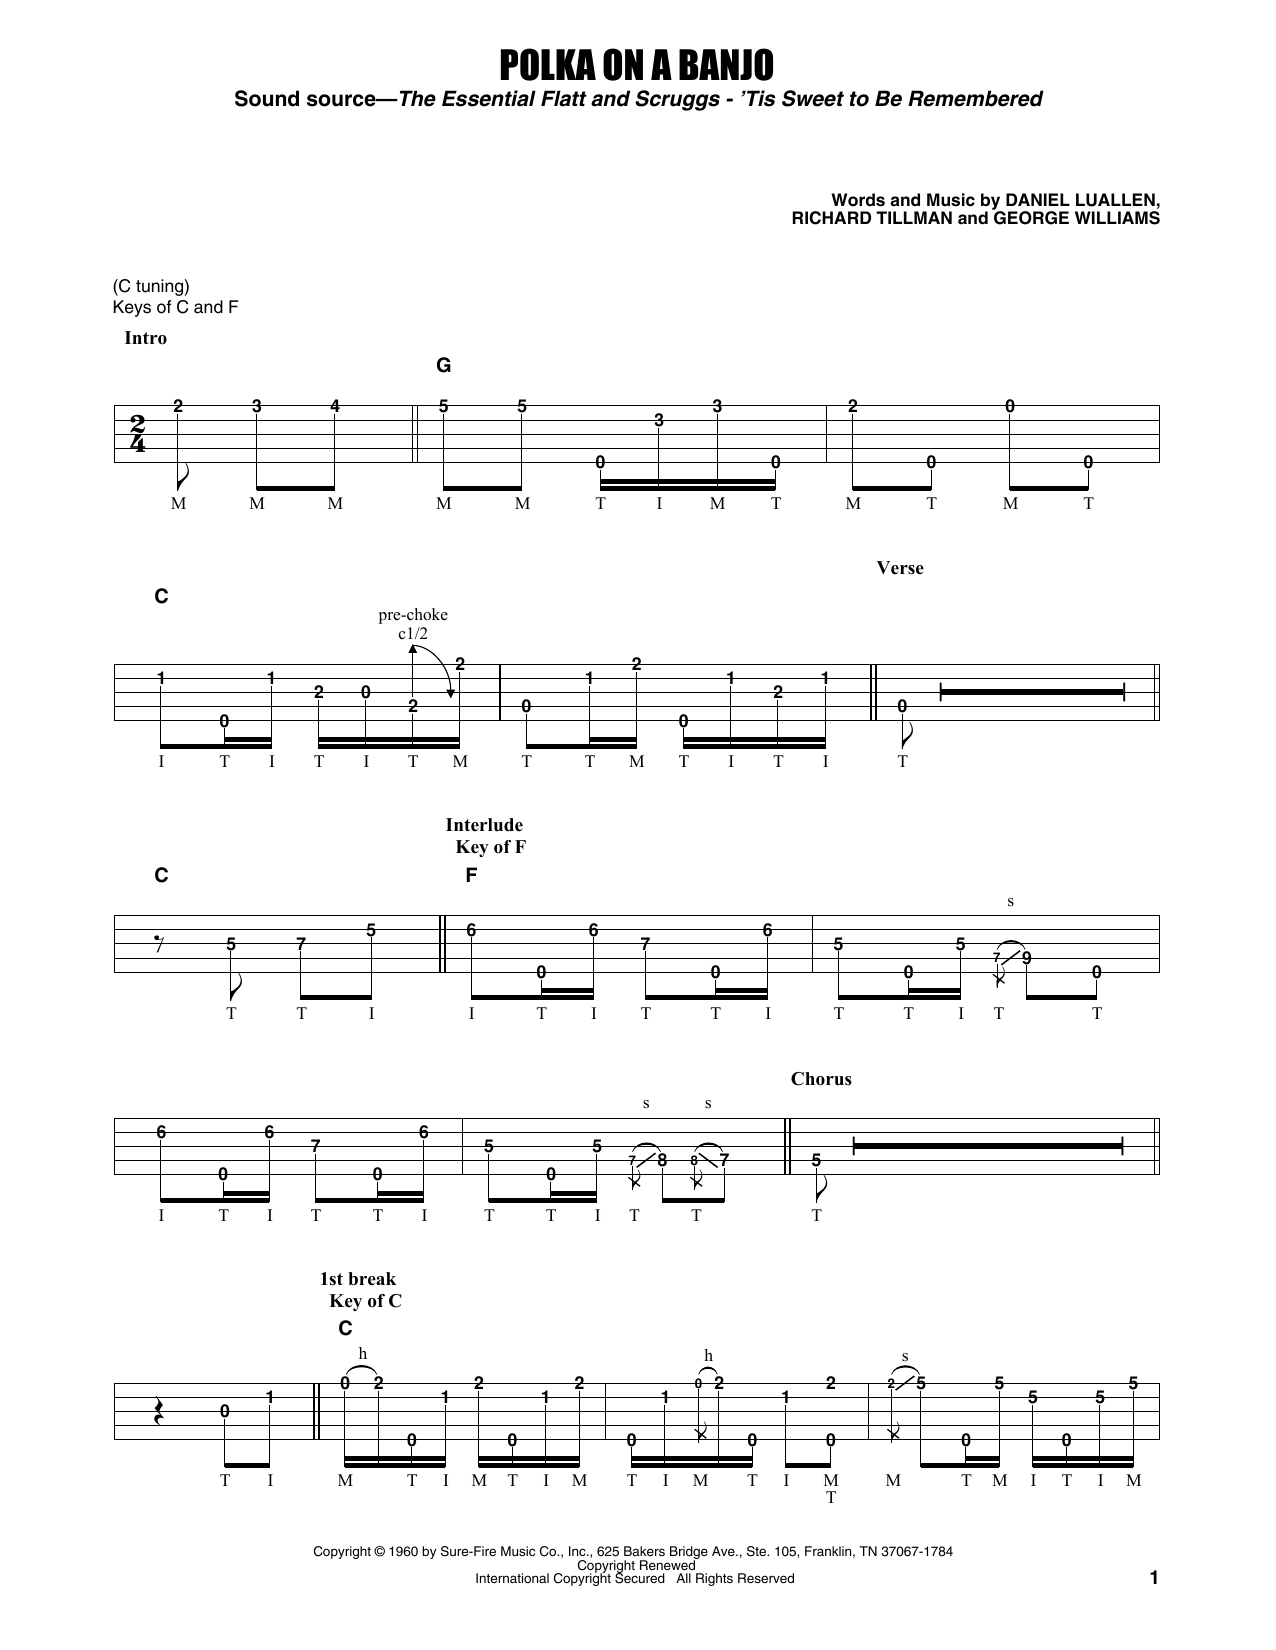 Flatt & Scruggs Polka On A Banjo Sheet Music Notes & Chords for Banjo Tab - Download or Print PDF